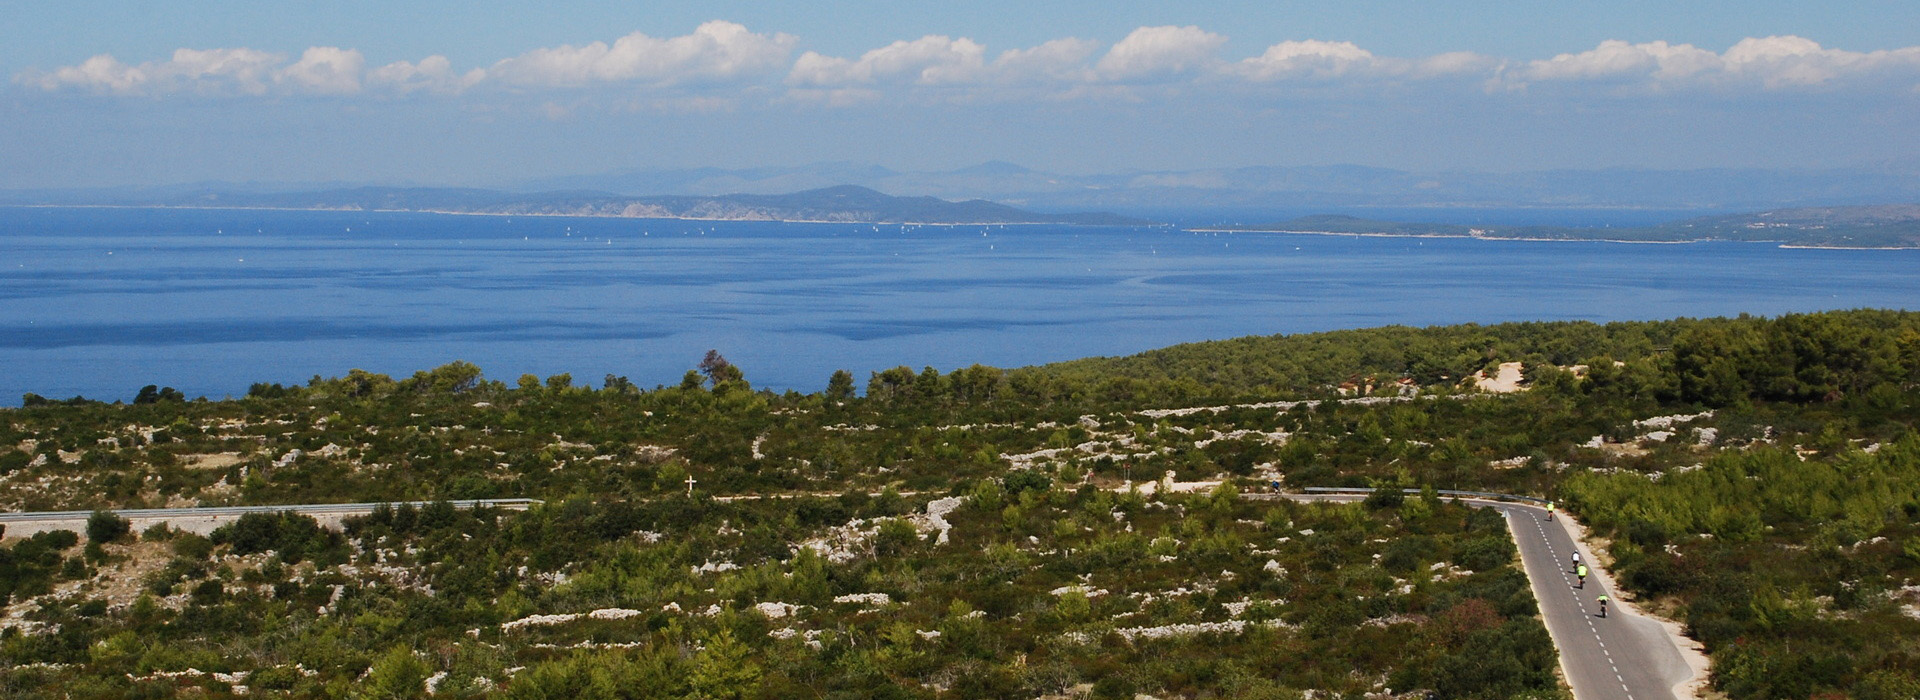 Cycling on the Dalmatian Coast guided holiday - Otok Hvar